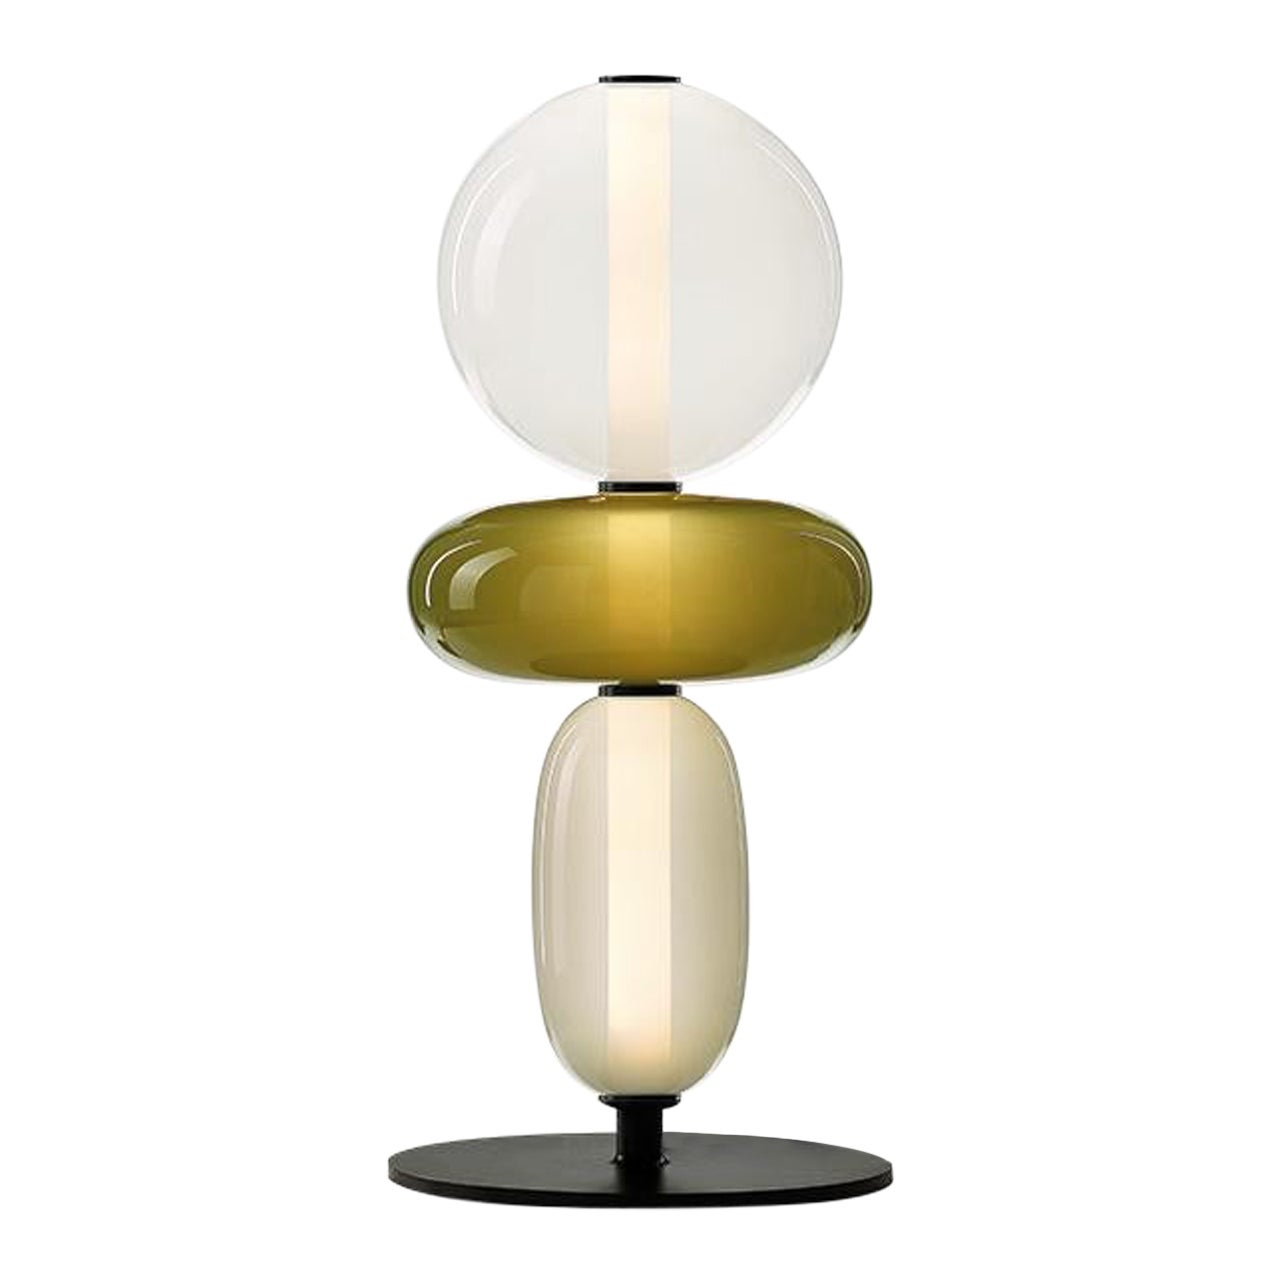 Contemporary Blown Crystal Glass Floor Lamp - Pebbles by Boris Klimek for Bomma